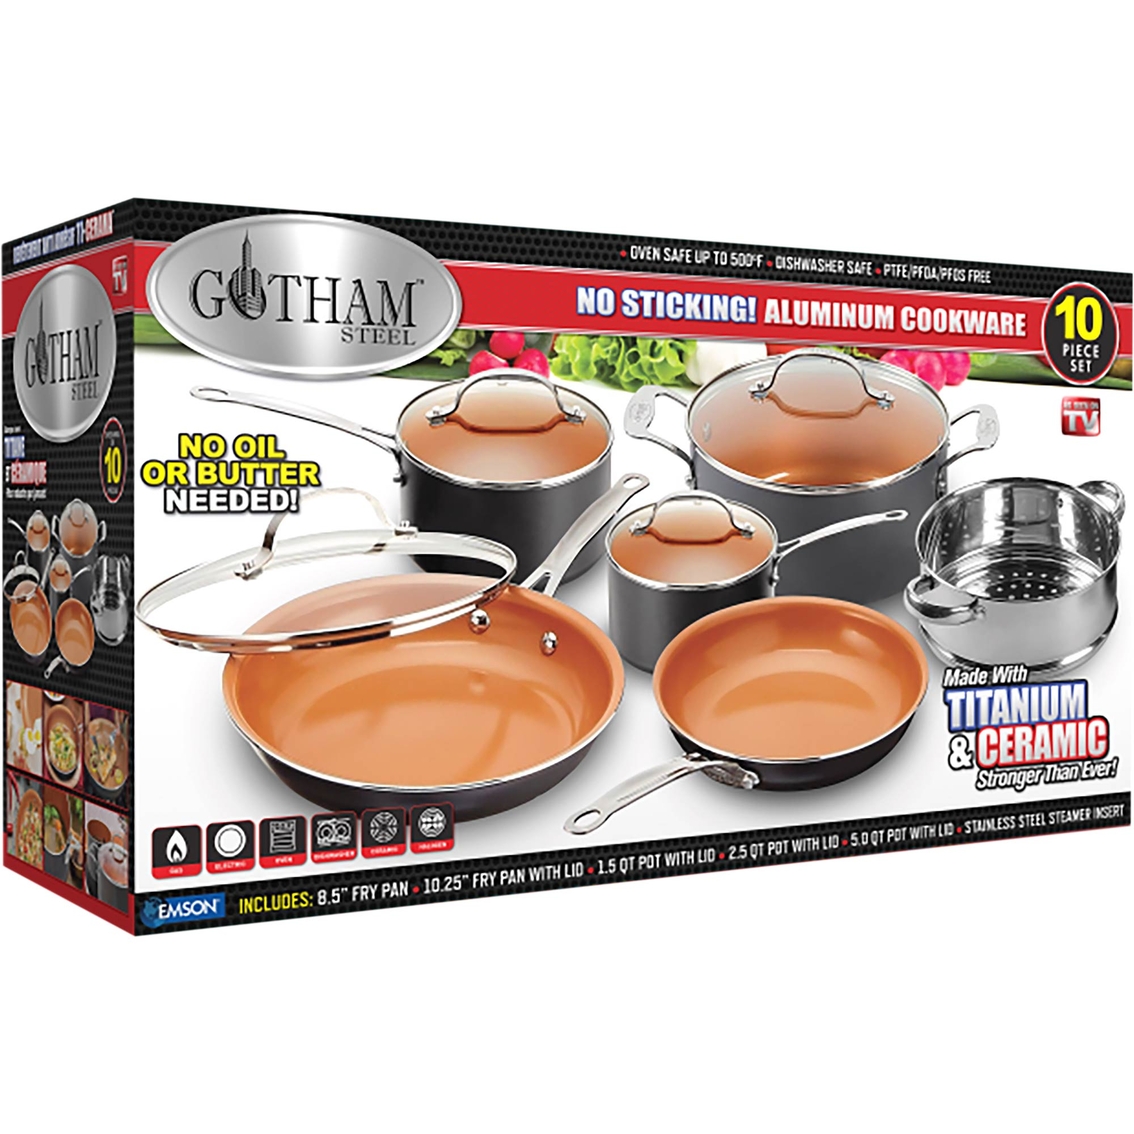 Gotham Steel Cookware Set - 10 pc